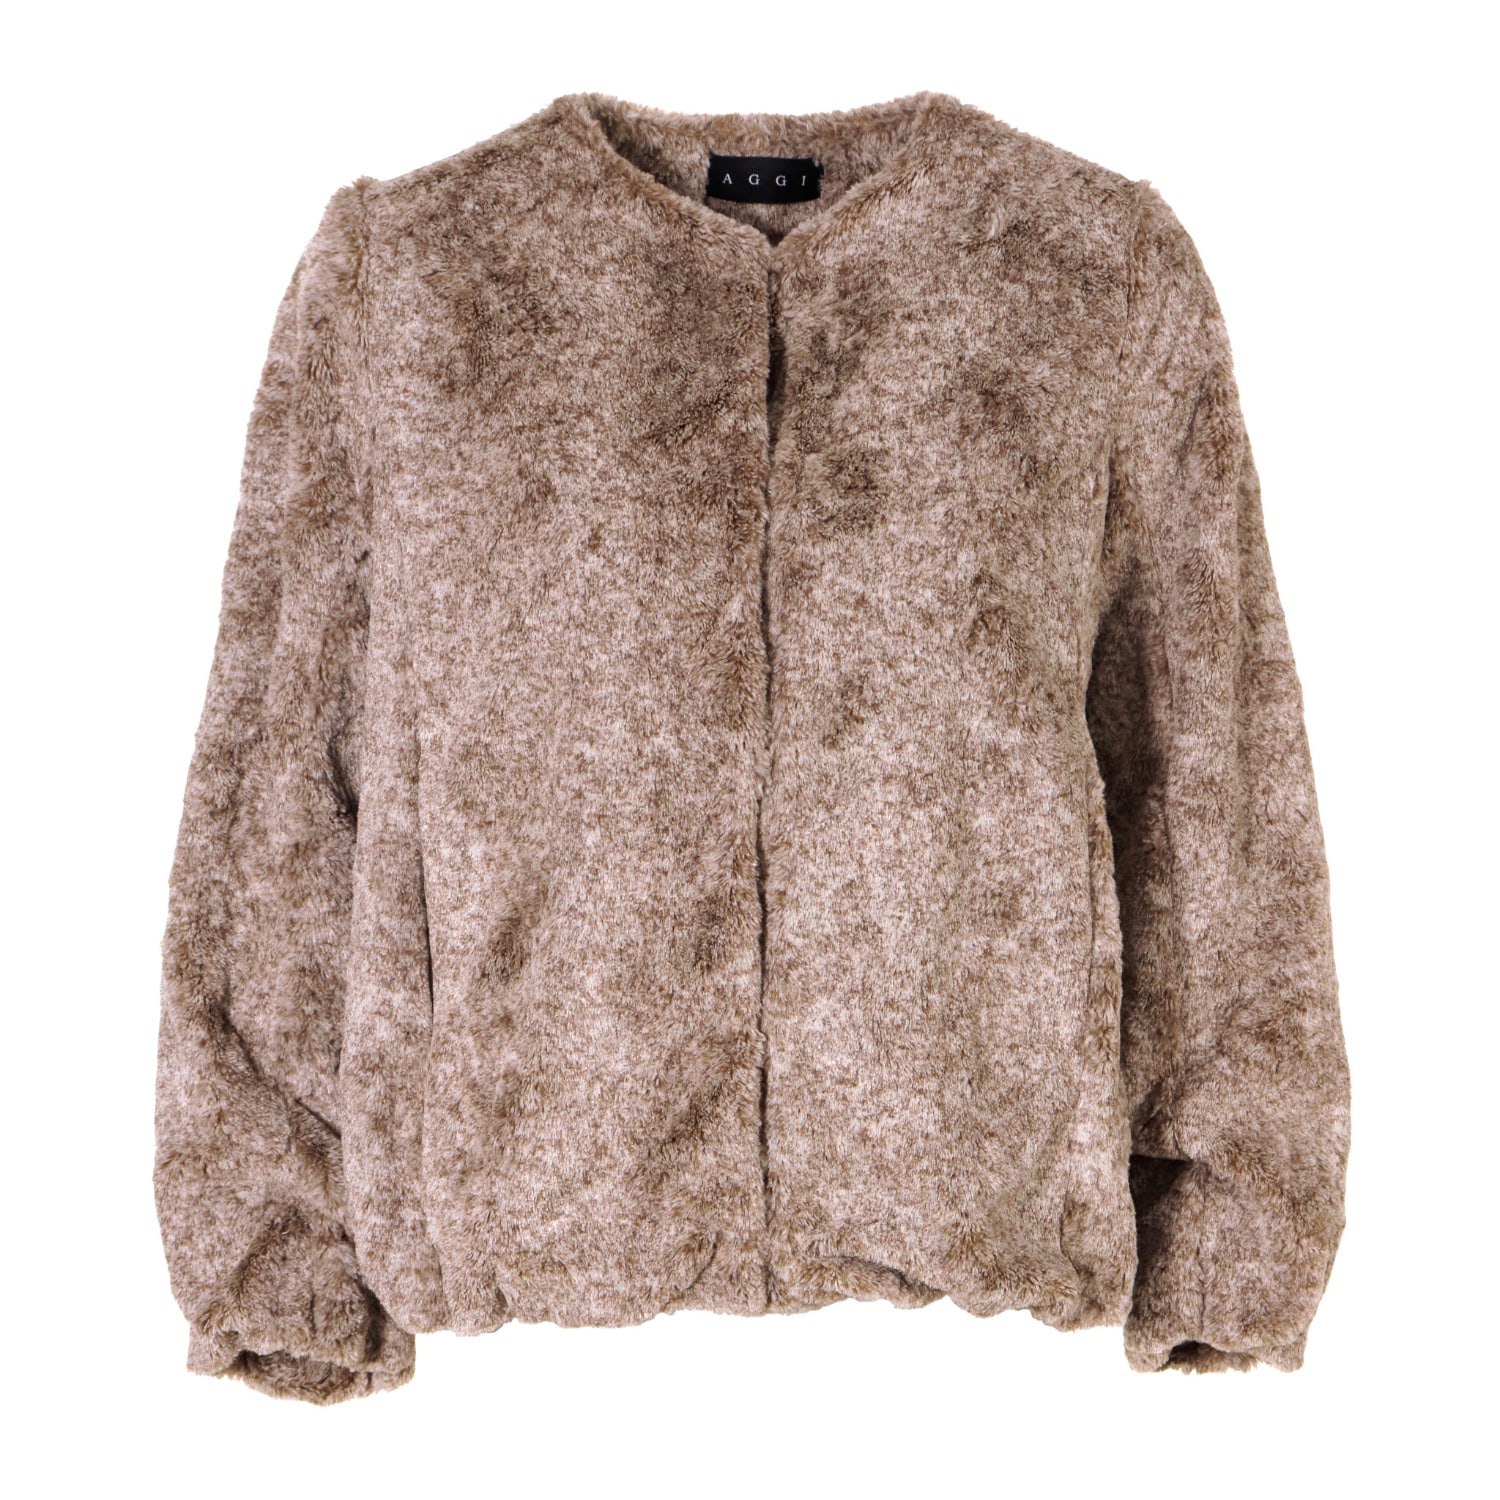 Aggi Women's Brown Faux Fur Jacket Heidi Beige